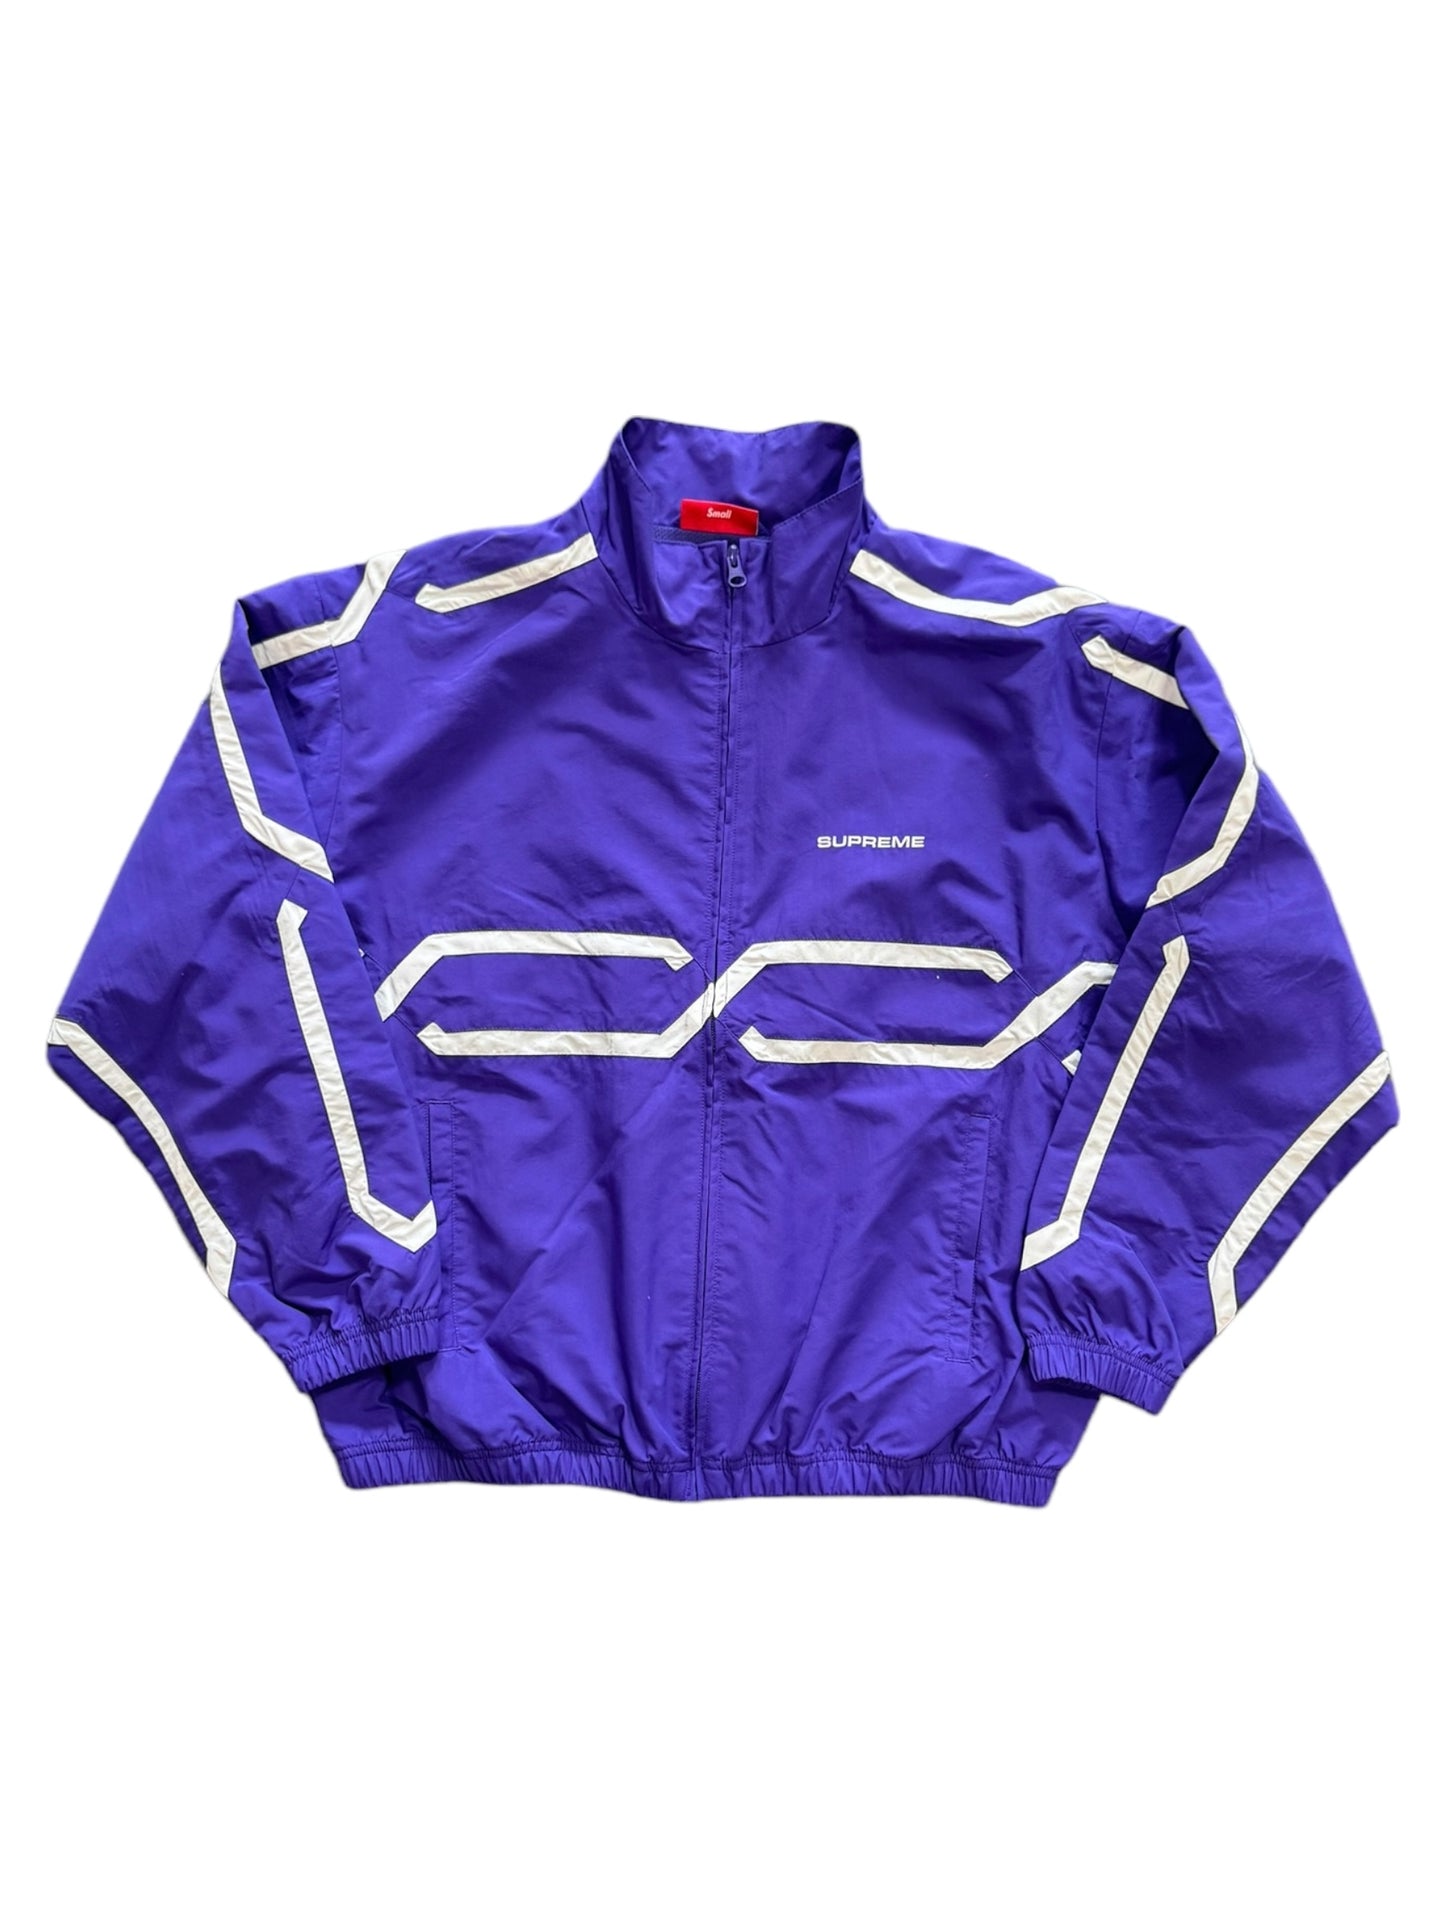 Purple Supreme Track Jacket